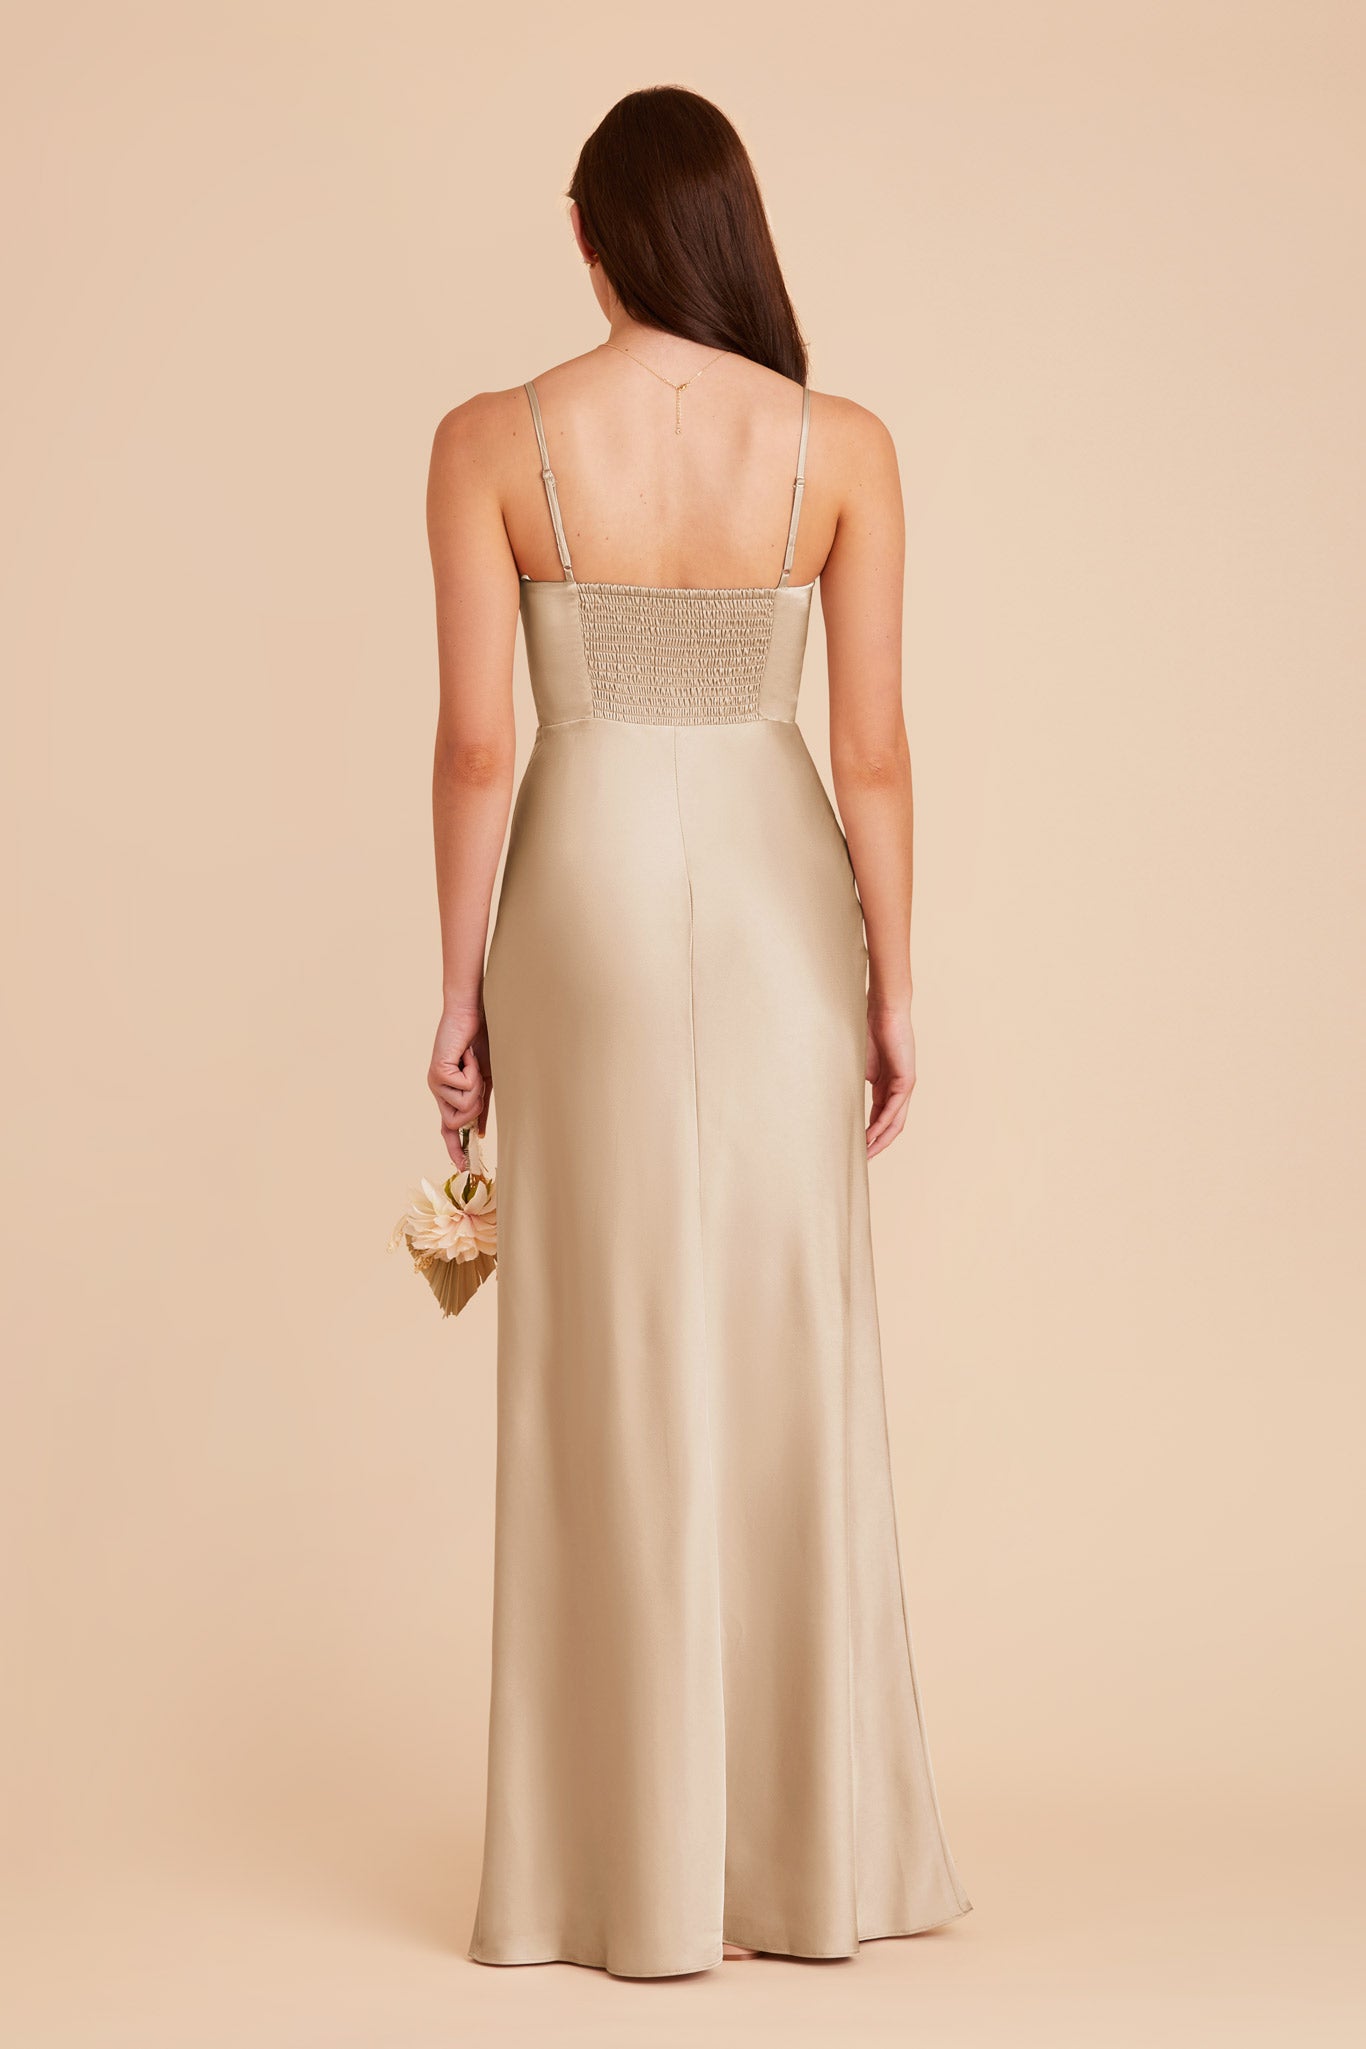 Gold Jessica Matte Satin Dress by Birdy Grey